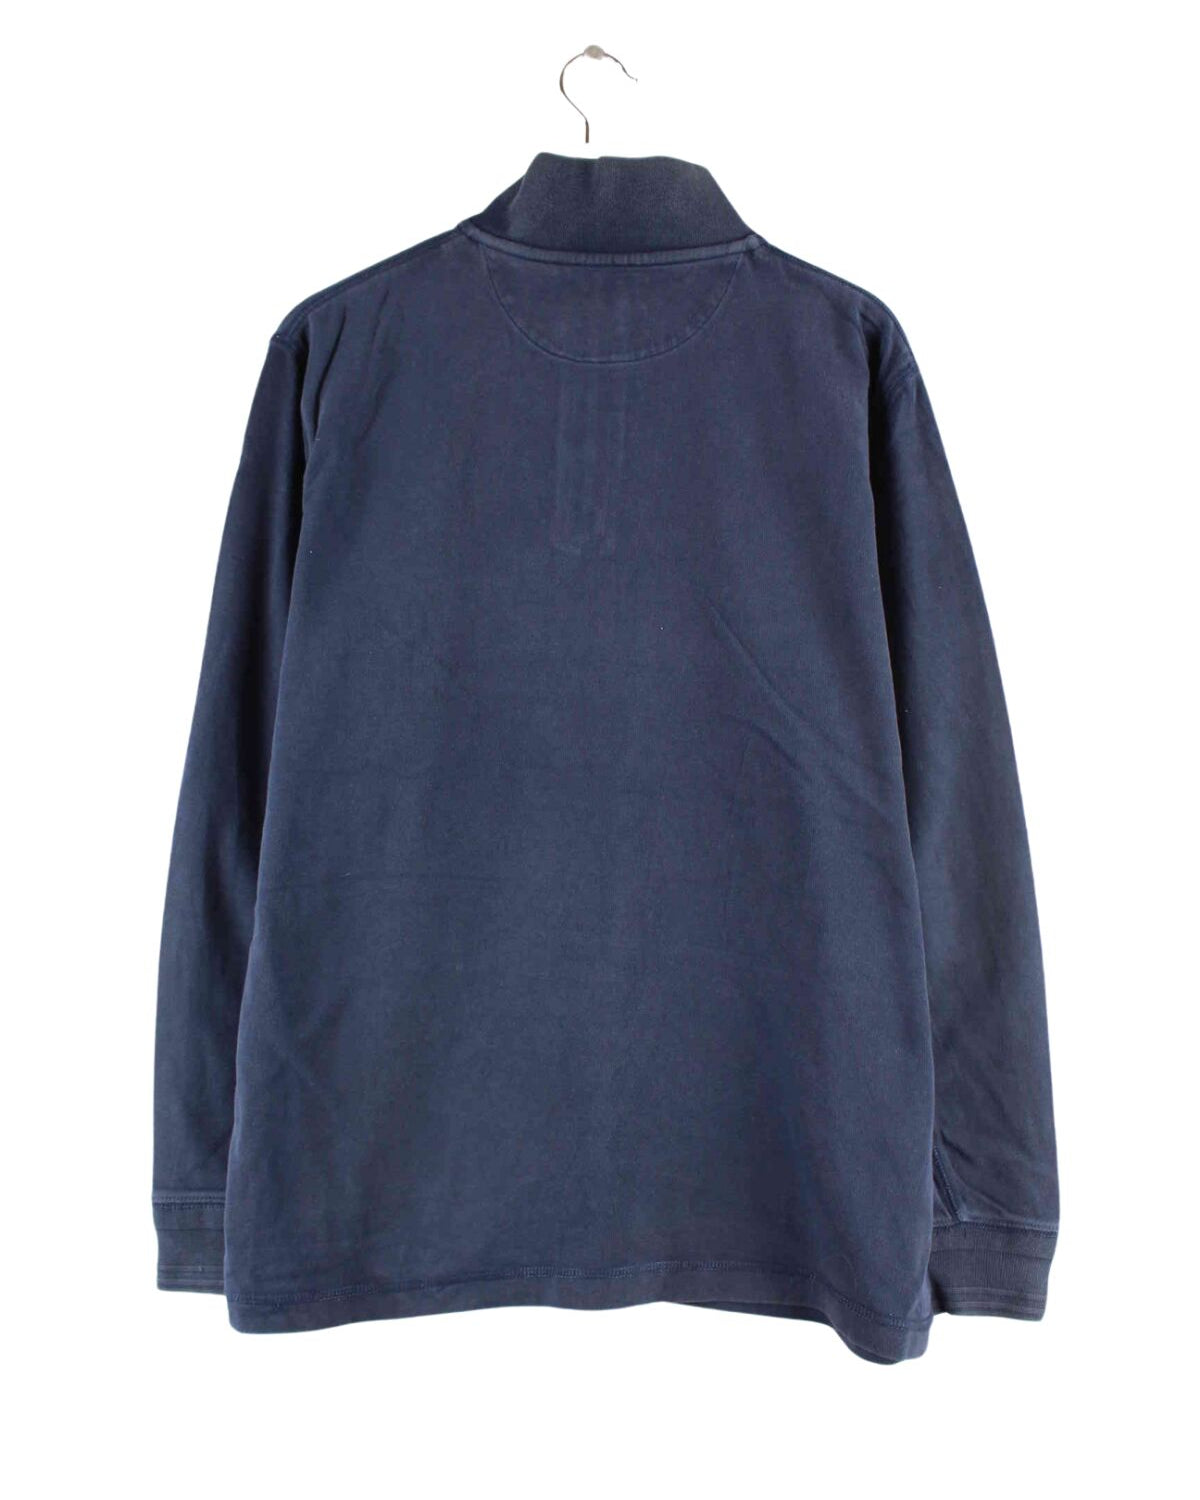 Timberland Basic Half Zip Sweater Blau L (back image)